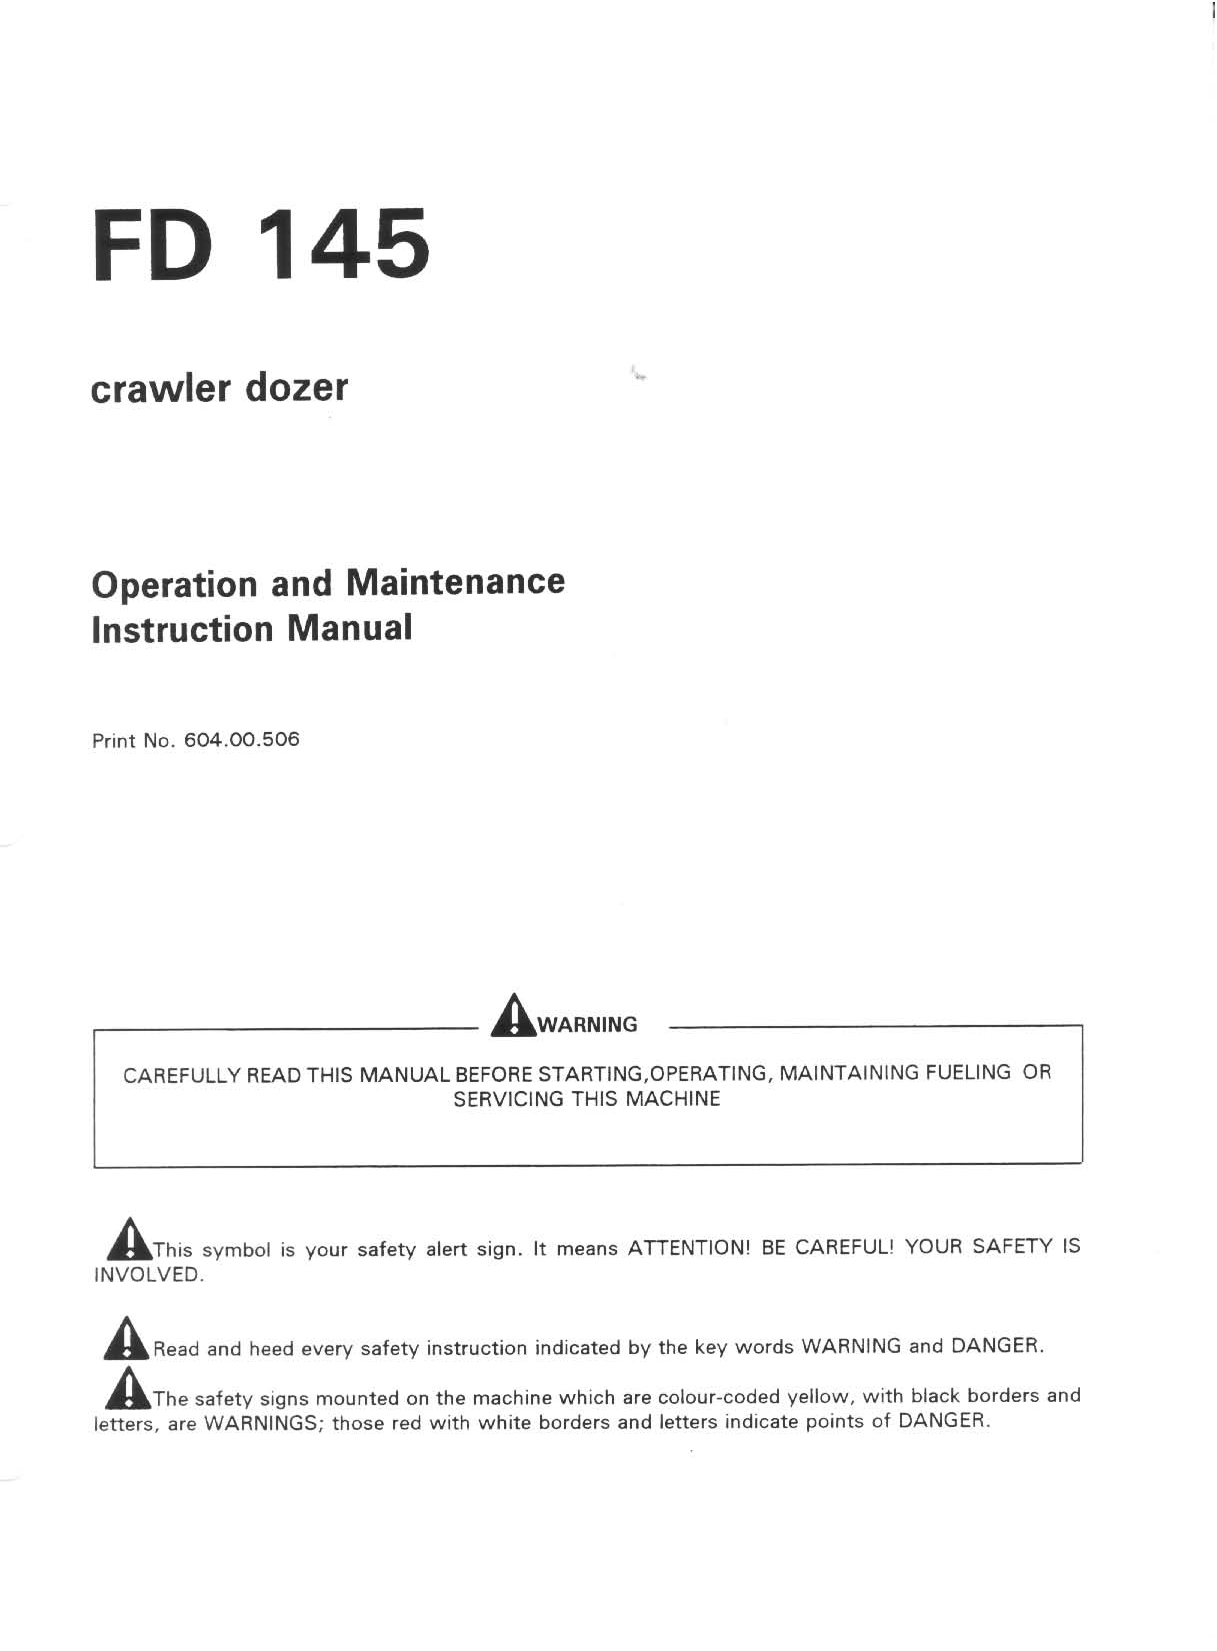 Fiat Allis FD 145 crawler dozer manual Preview image 2